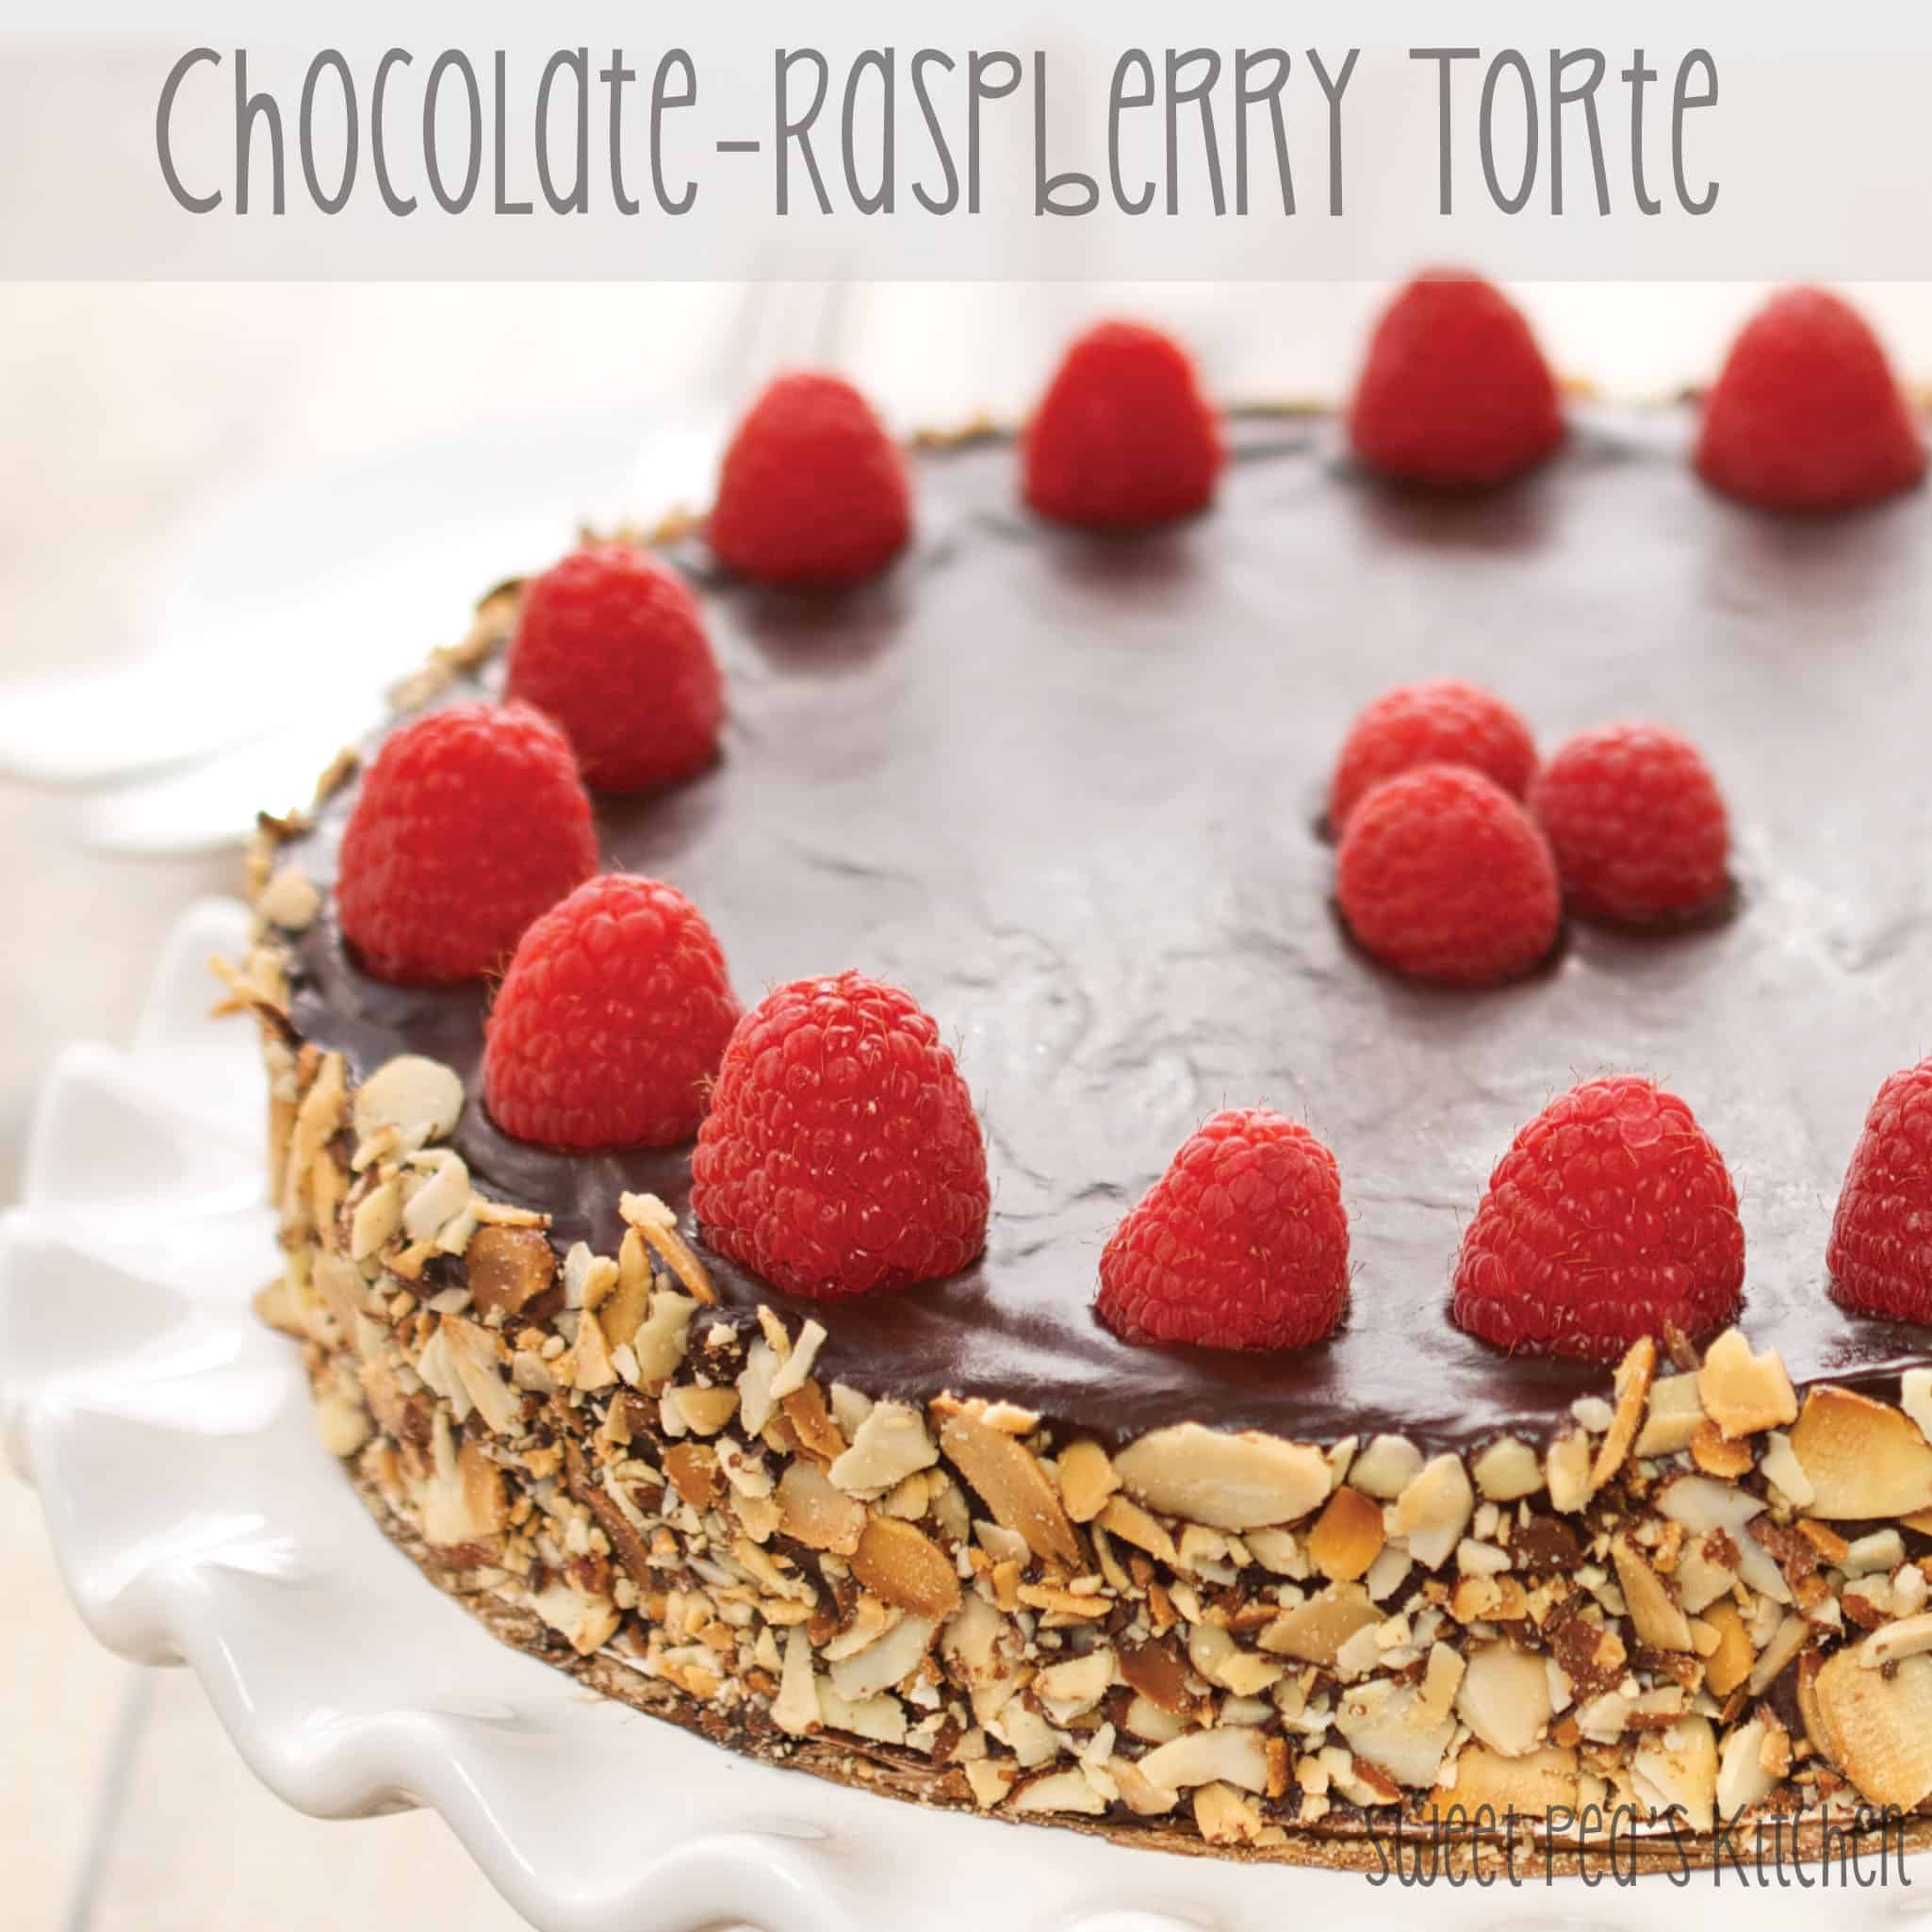 chocolate torte cake